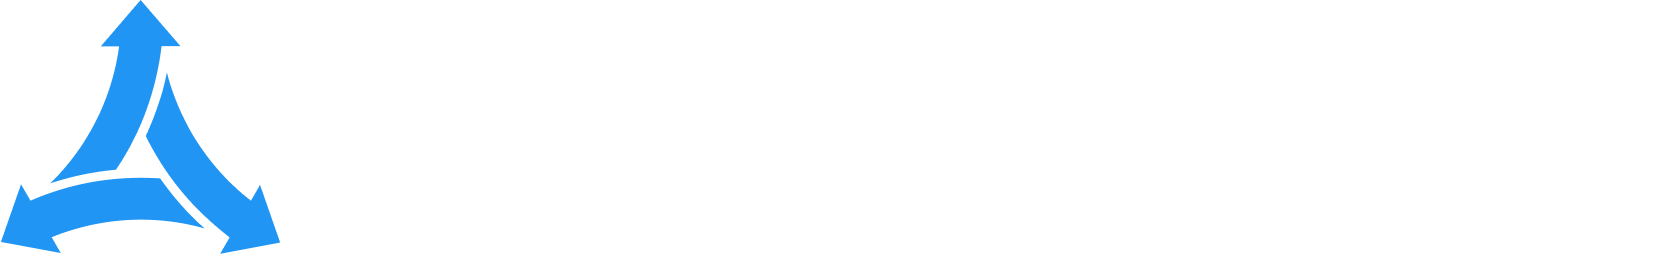 ChannelEngine.com logo